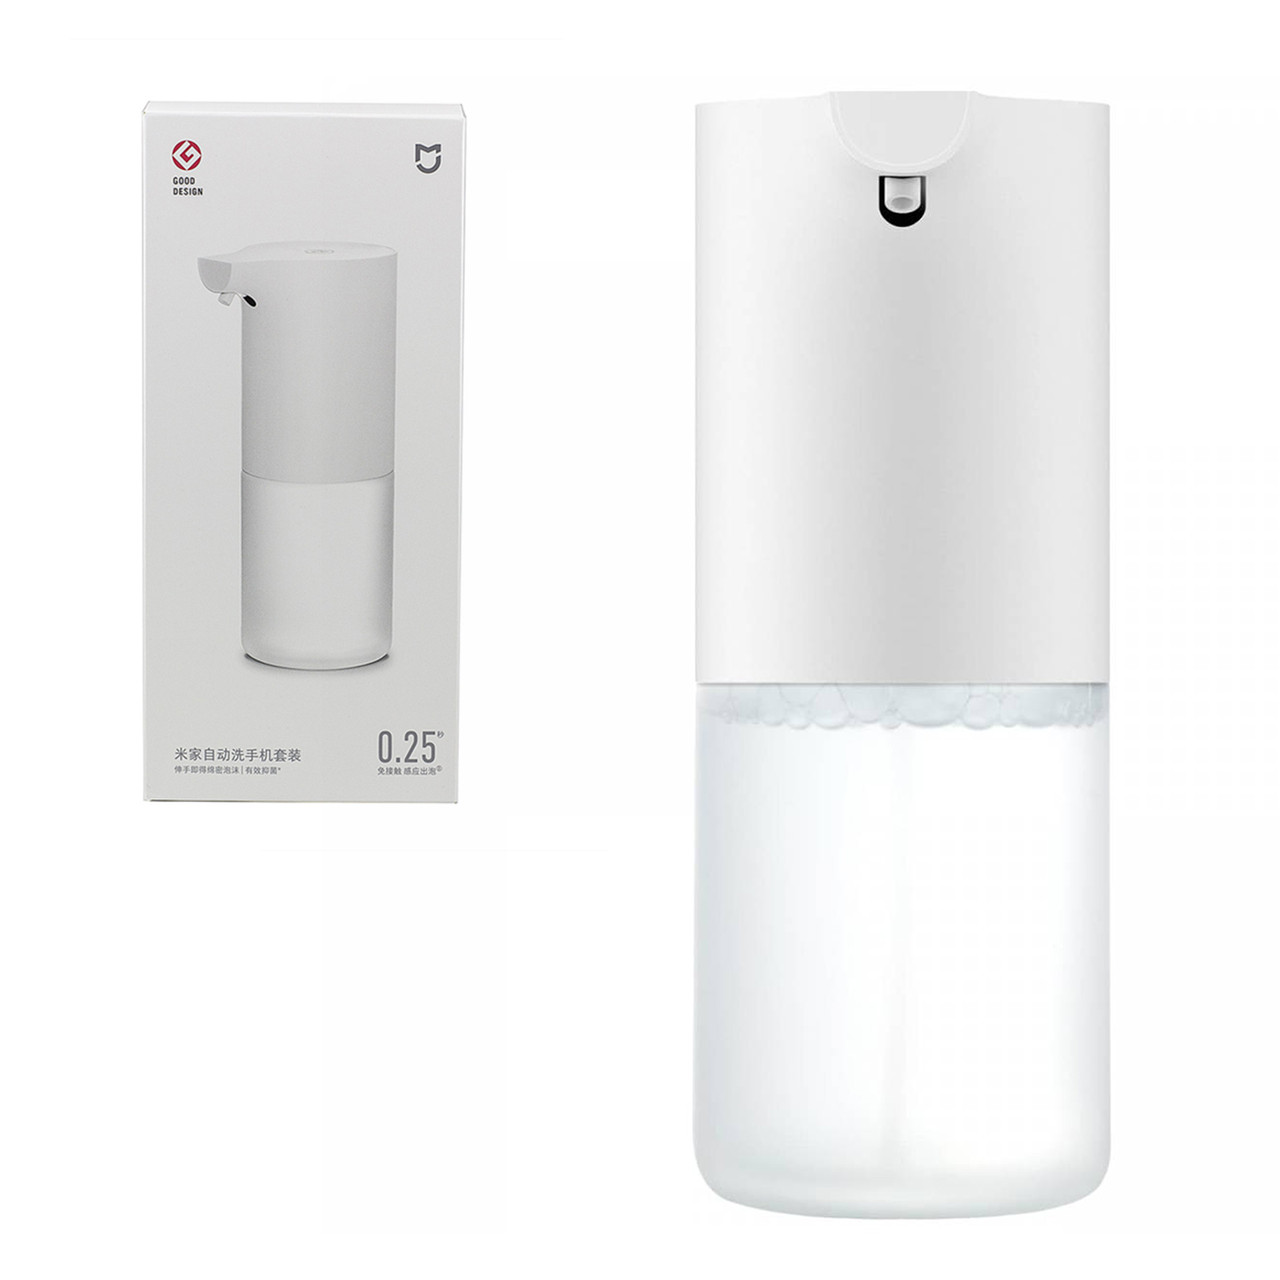 Сенсорная мыльница Xiaomi Mi Mijia Foam Soap Dispenser , White